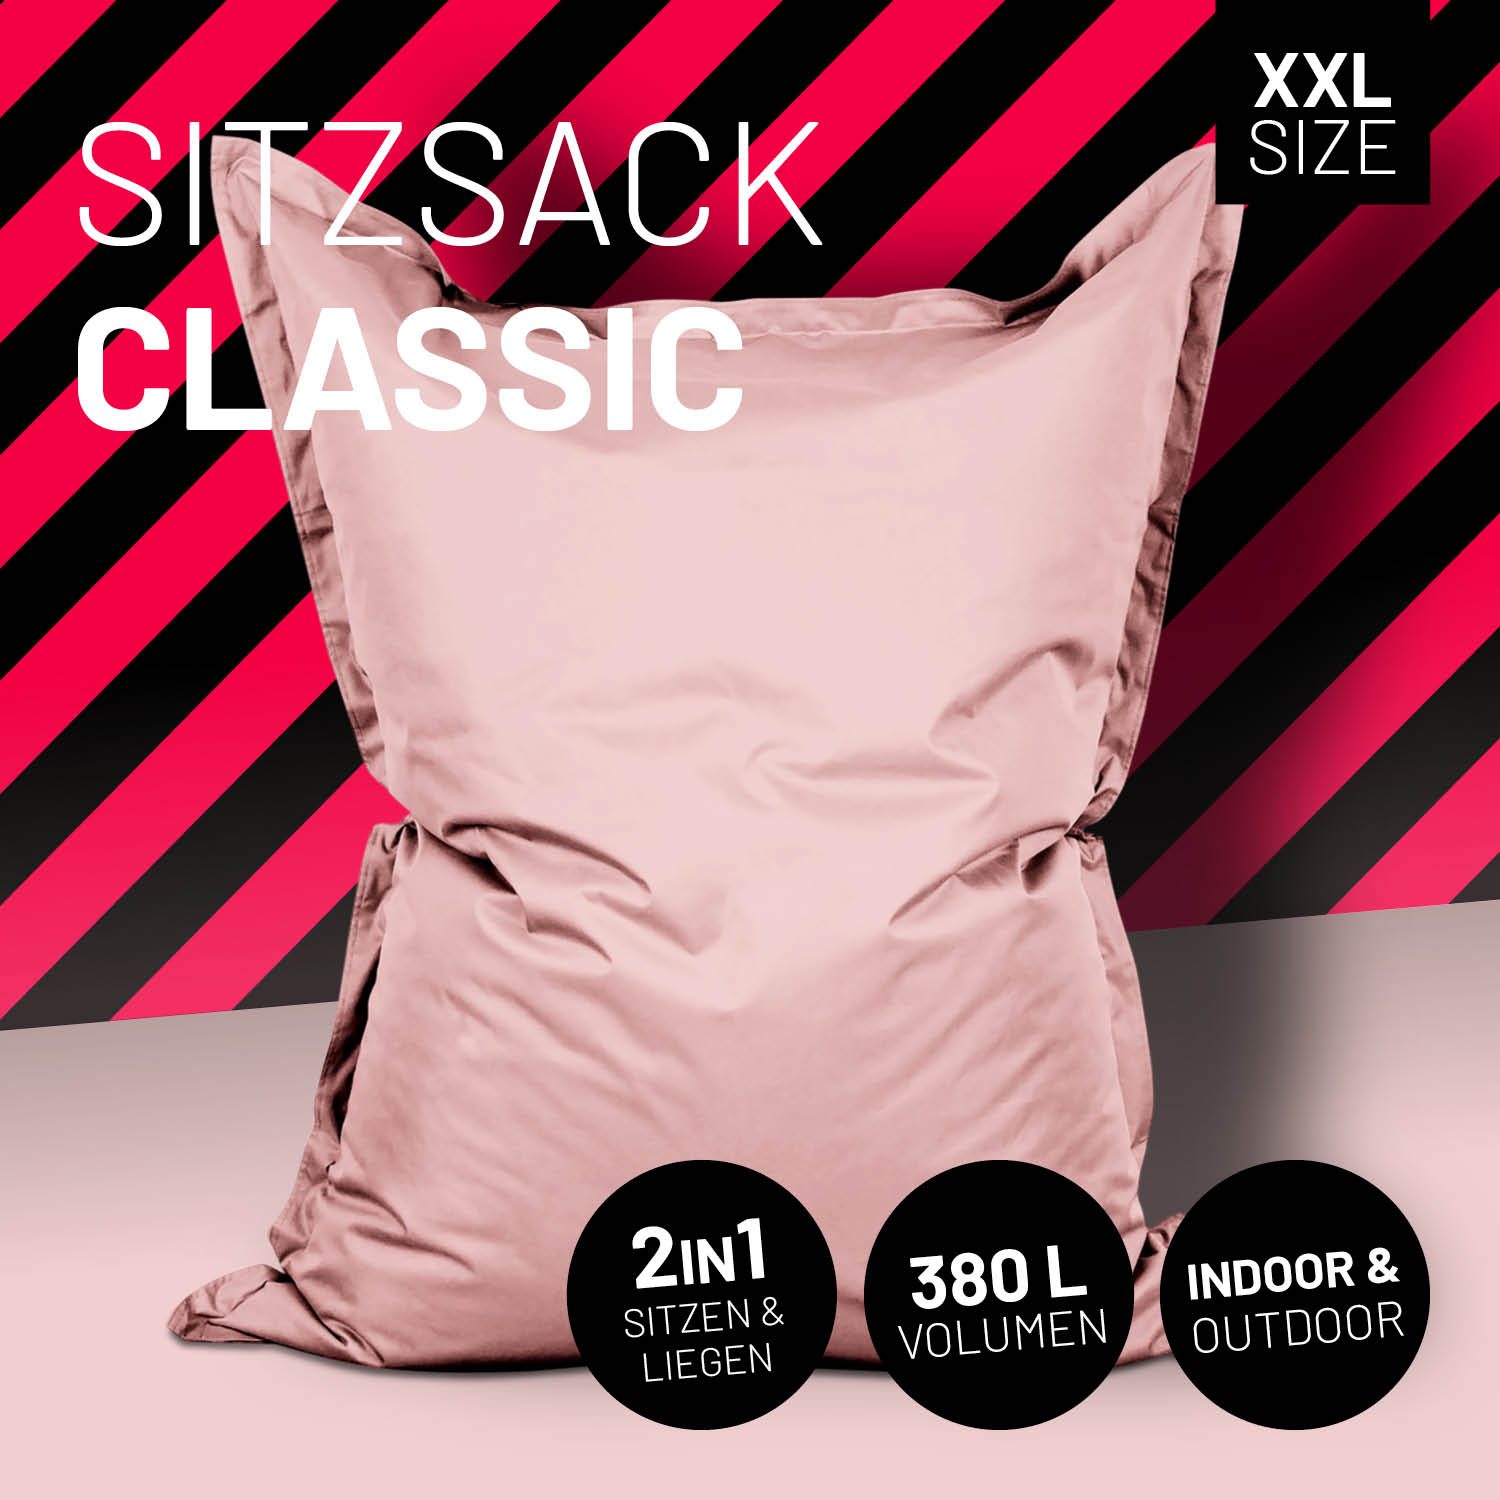 LUMALAND Sitzsack Classic XXL (380 L) - In- & outdoor - Pastell Pink